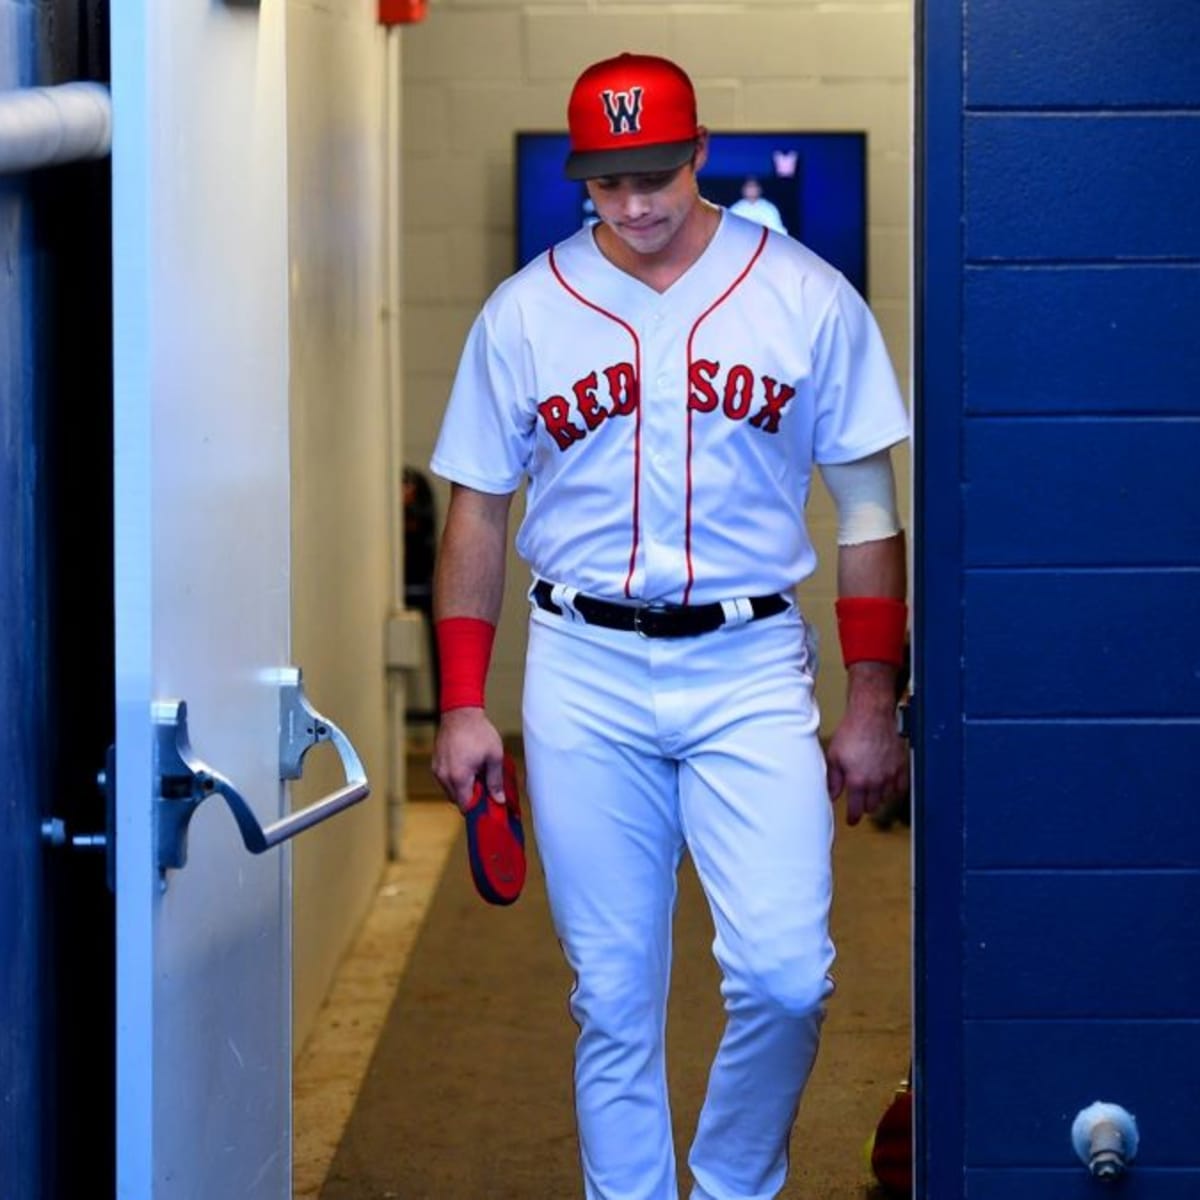 Dalbec's HR Helps Red Sox Avoid Sweep, Beat Yankees 4-3 - Bloomberg